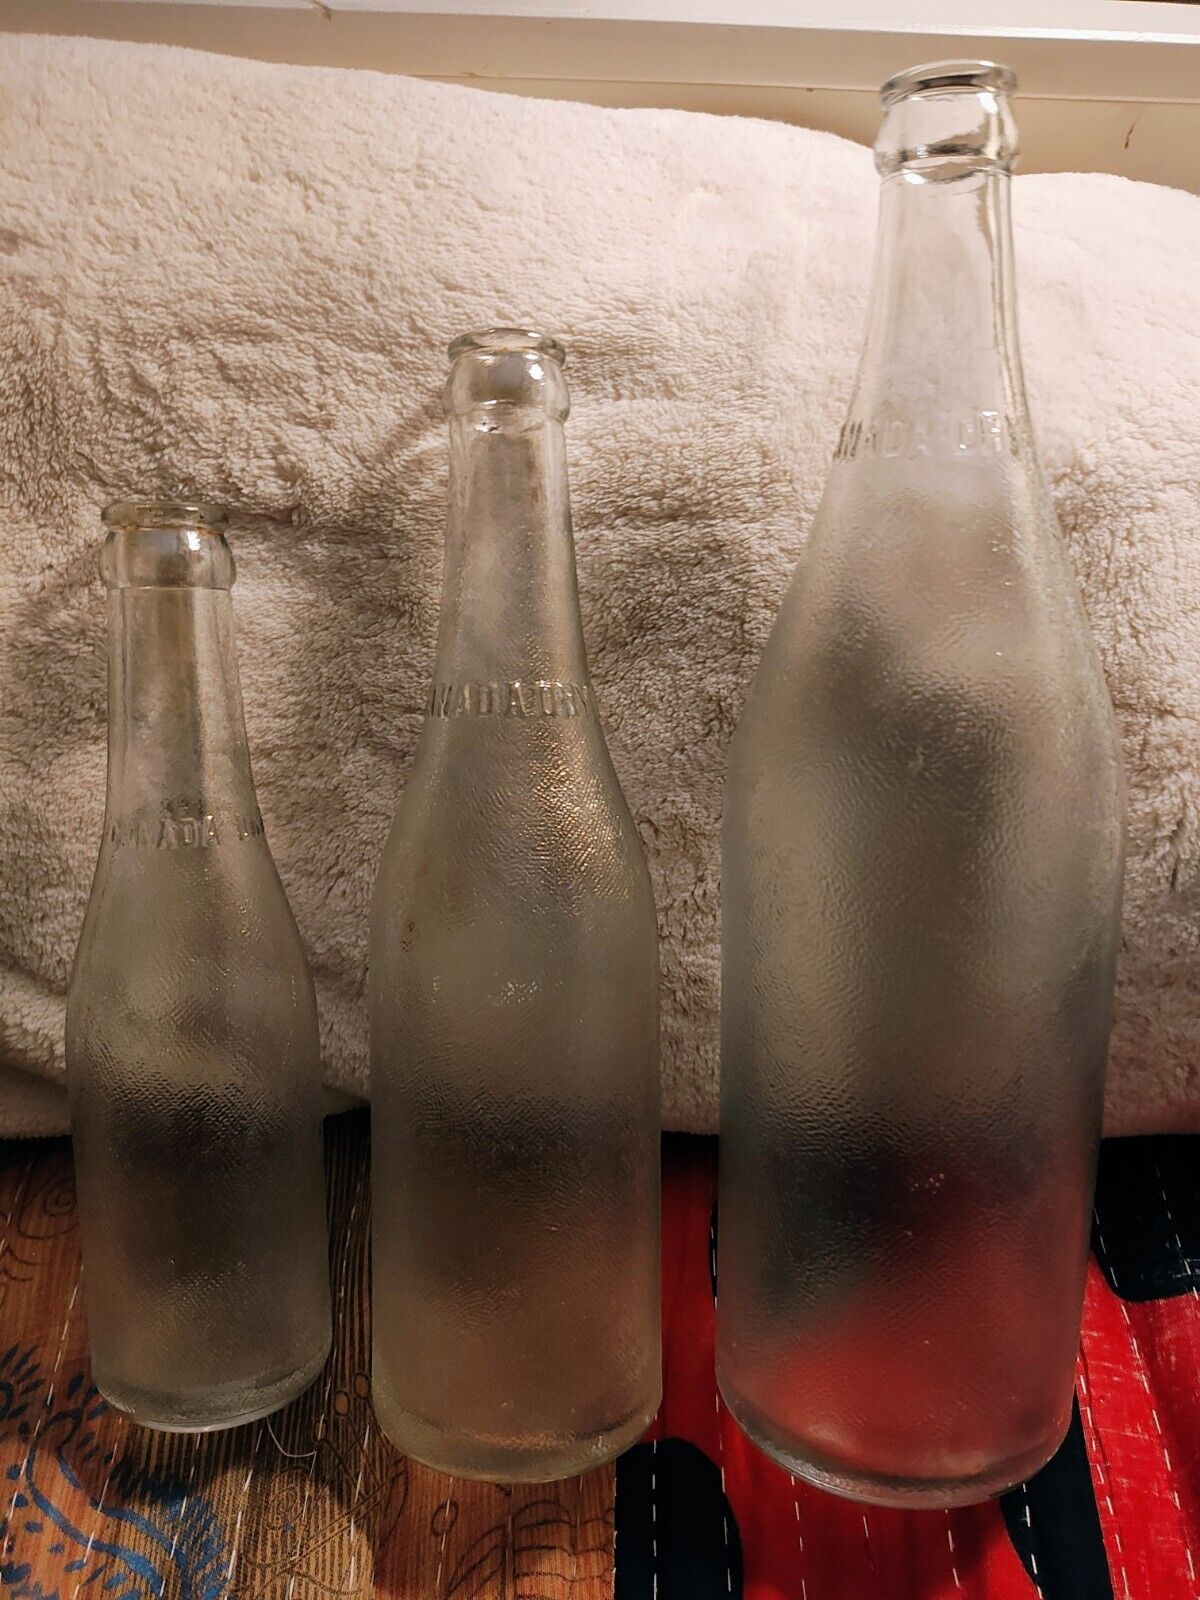 Vintage Canada Dry Soda Bottles - 3 Sizes - Textured - 1930s?